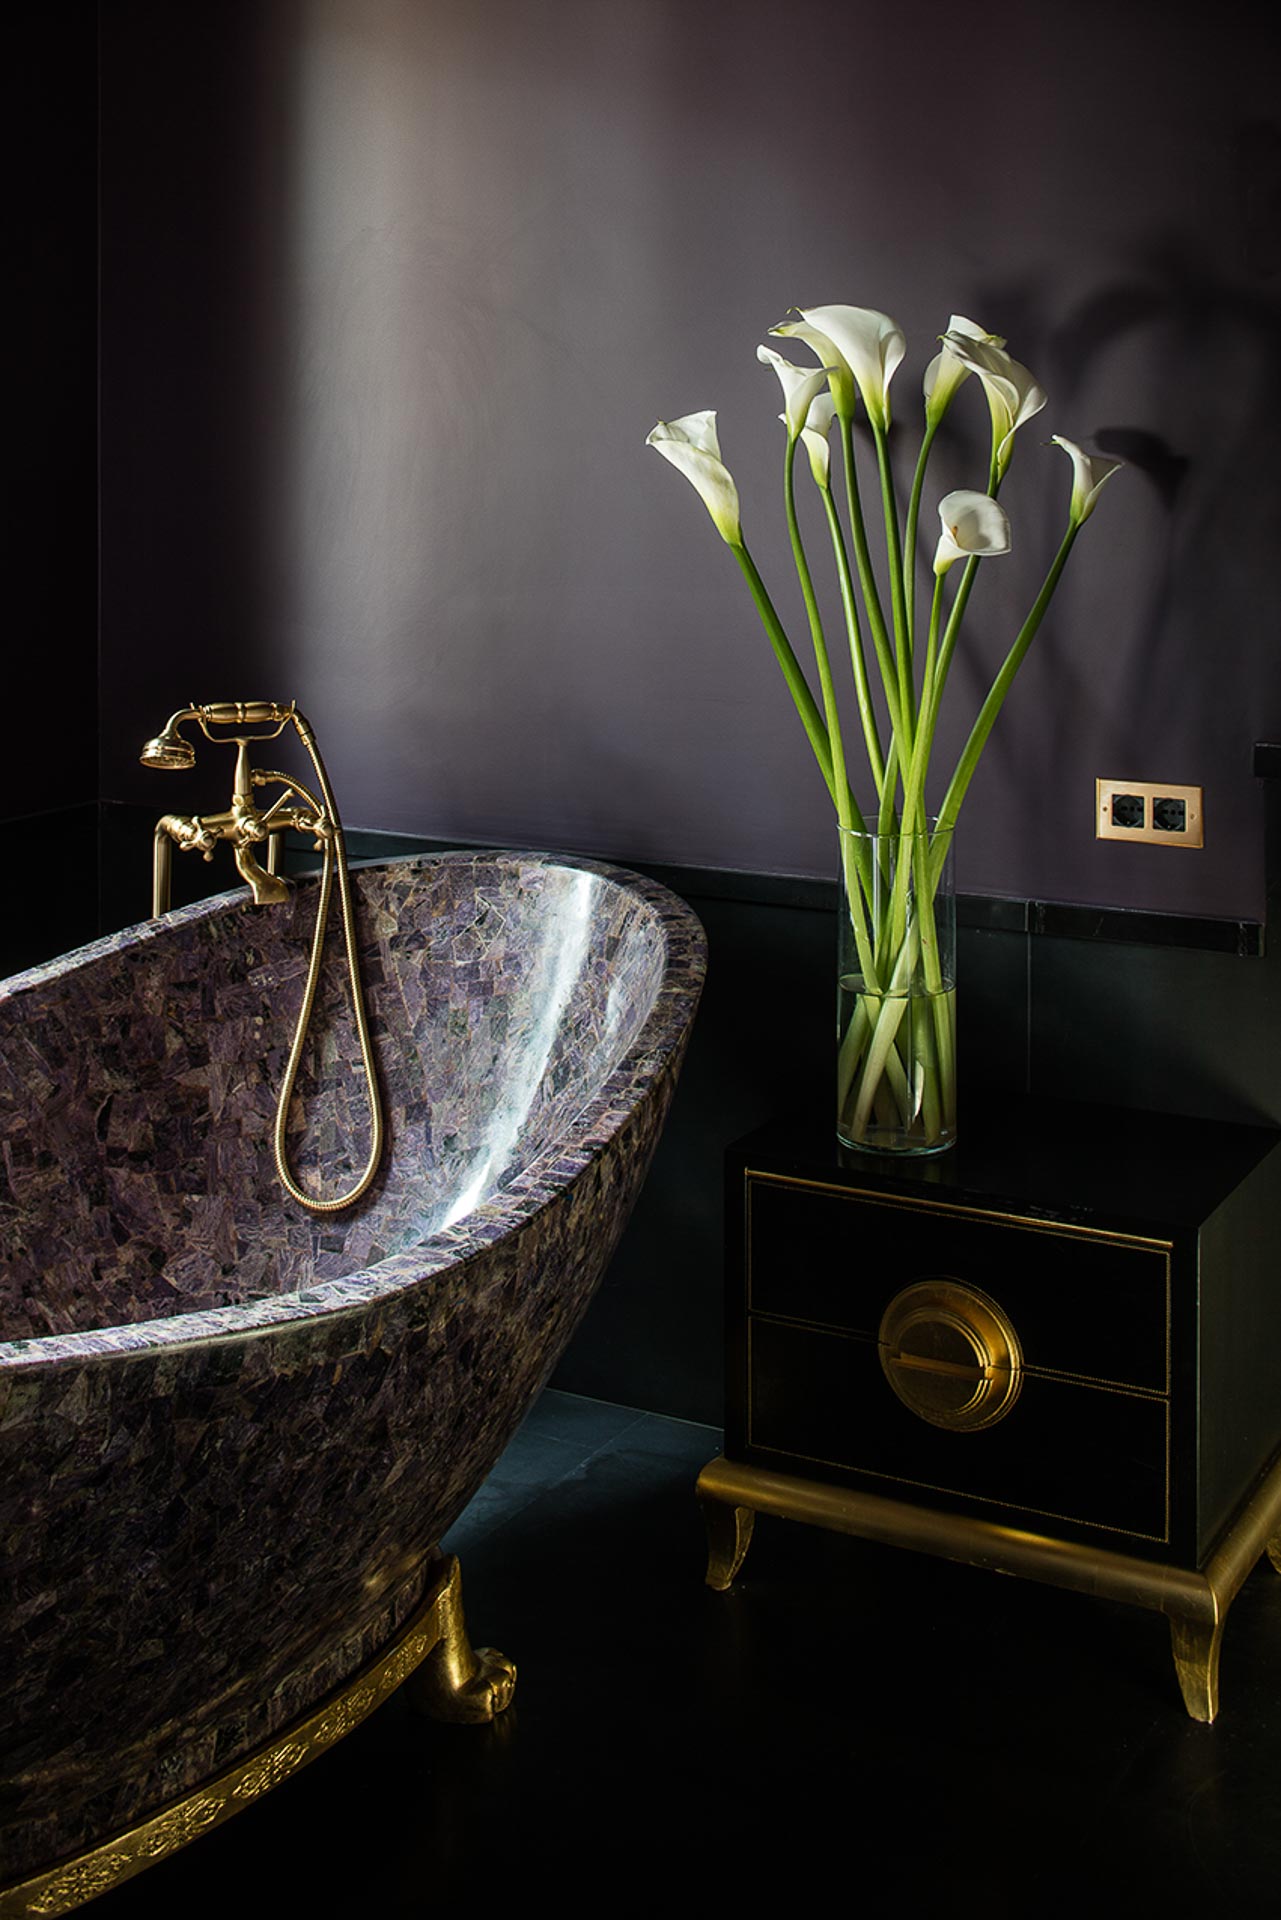 Villa Clara luxury home unique property for hire Rome best accommodation luxurious bathroom design charoite bathtub